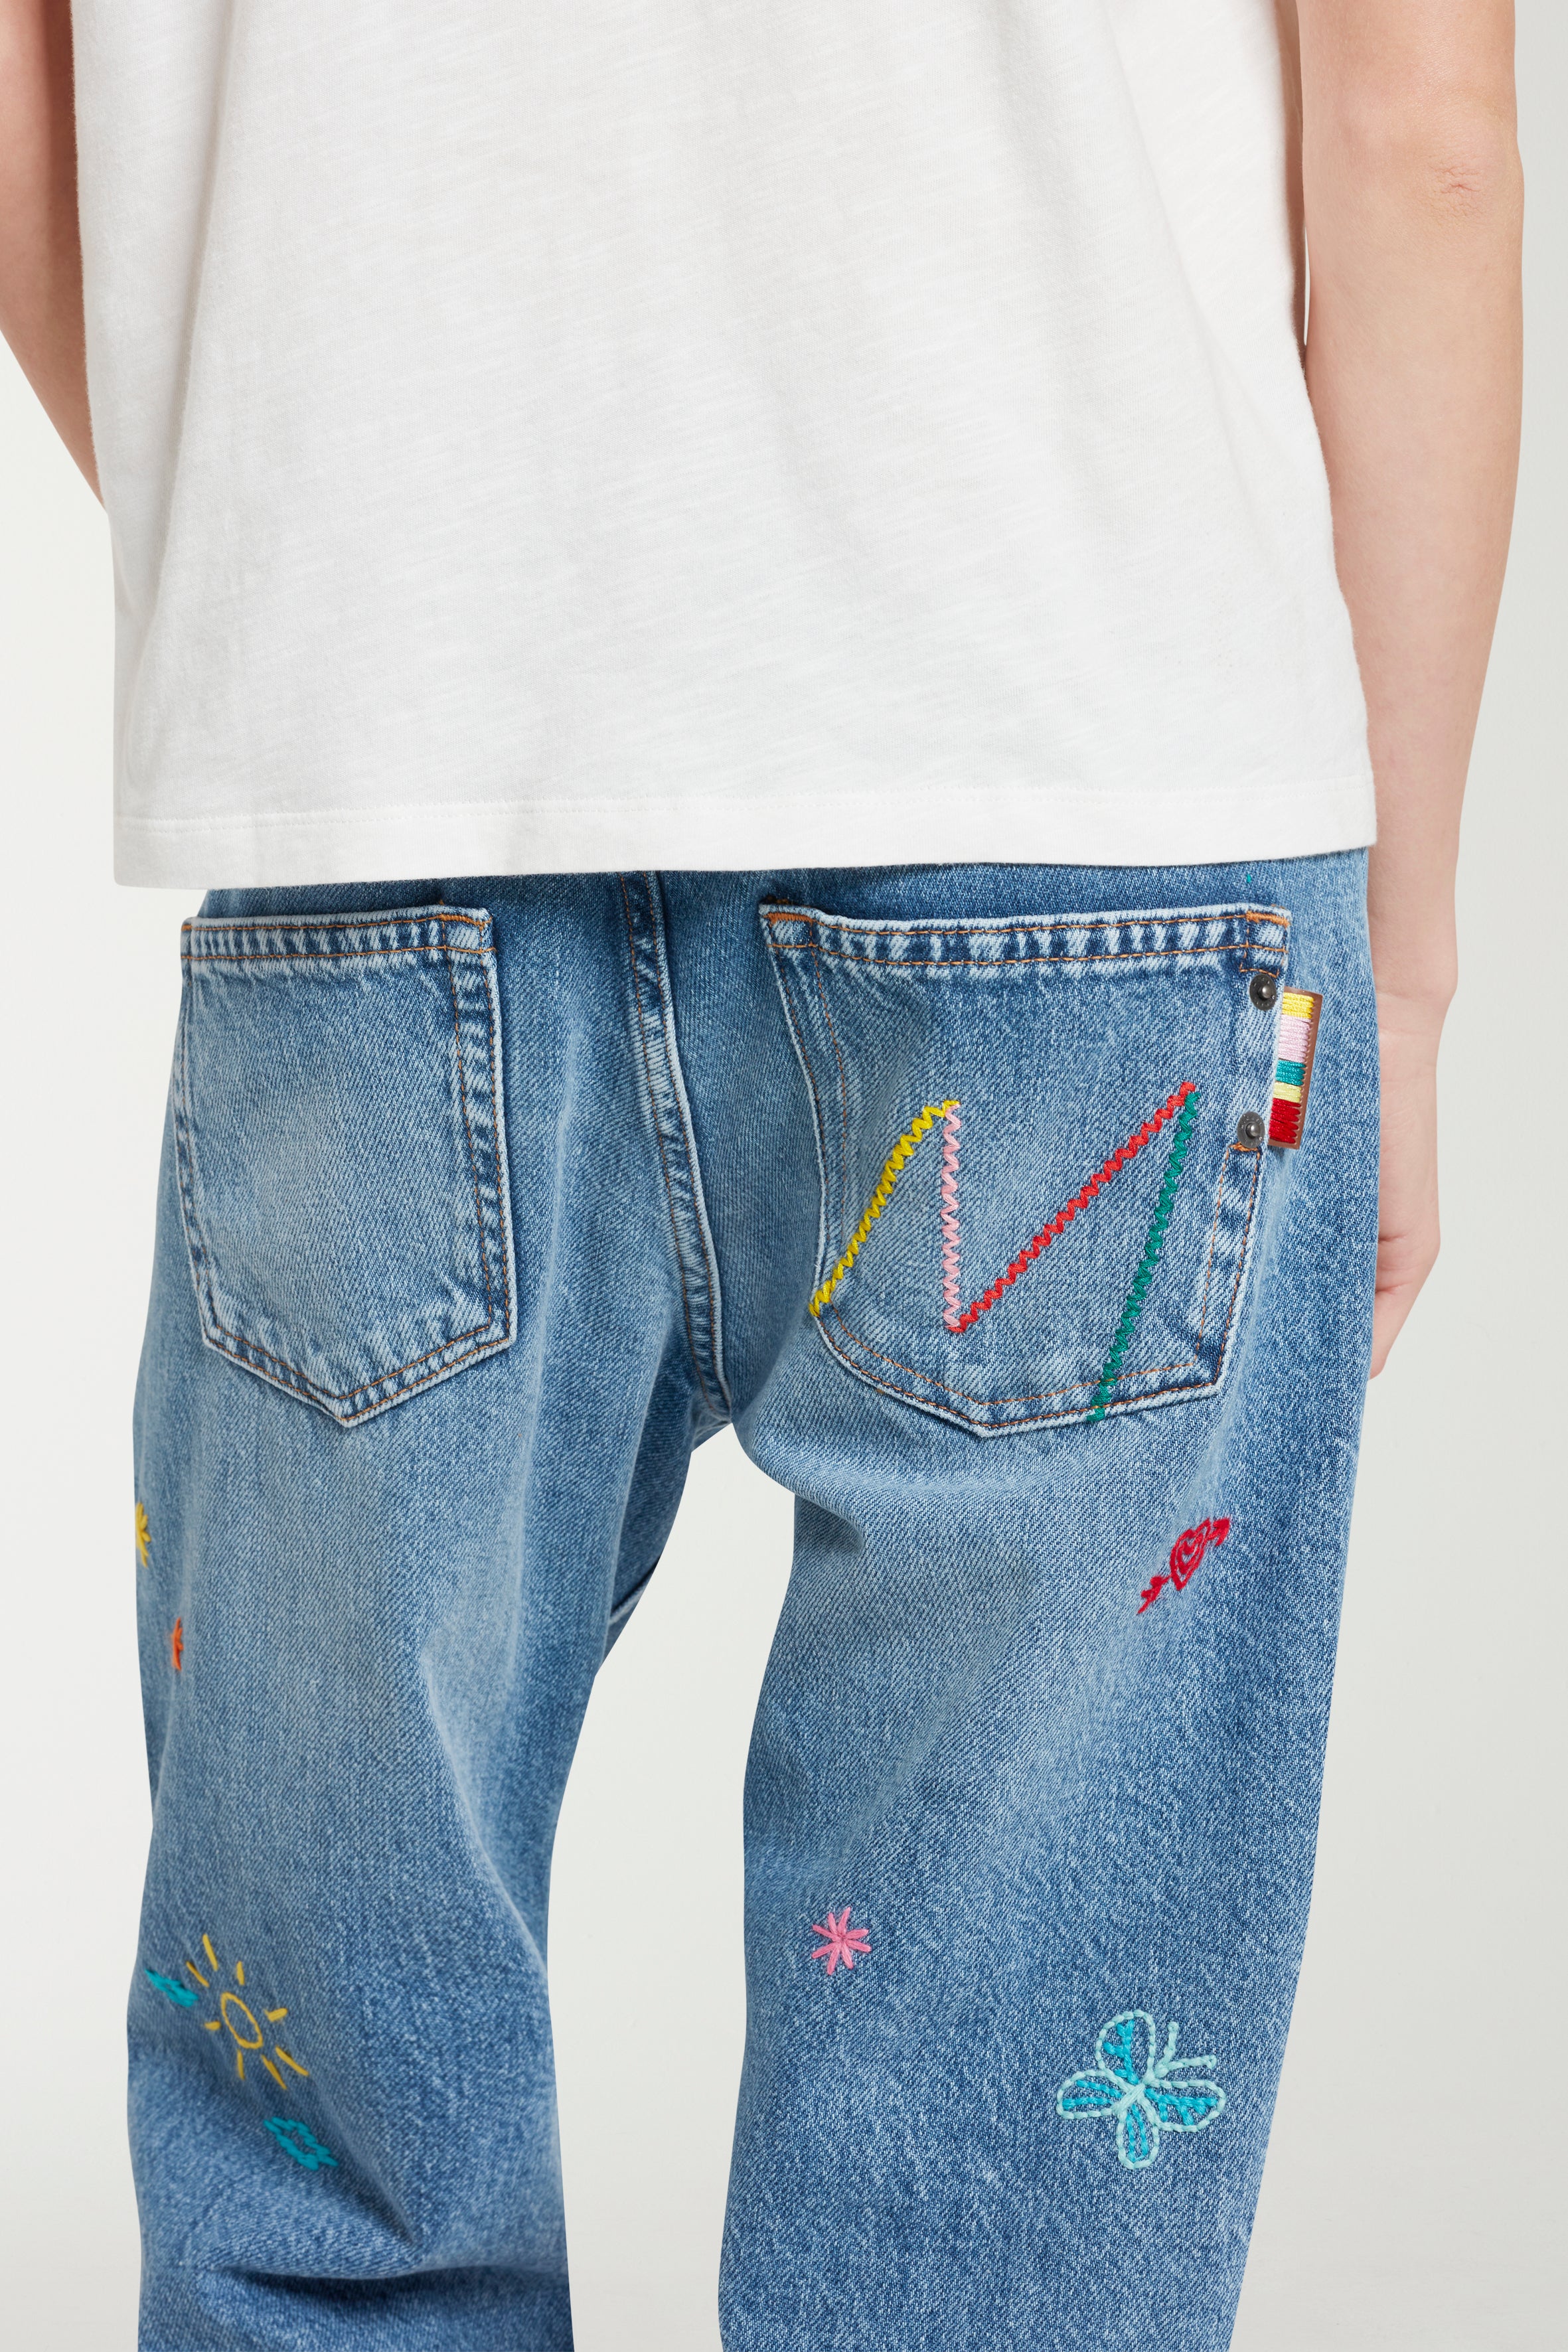 Denim Embroidered Jeans 